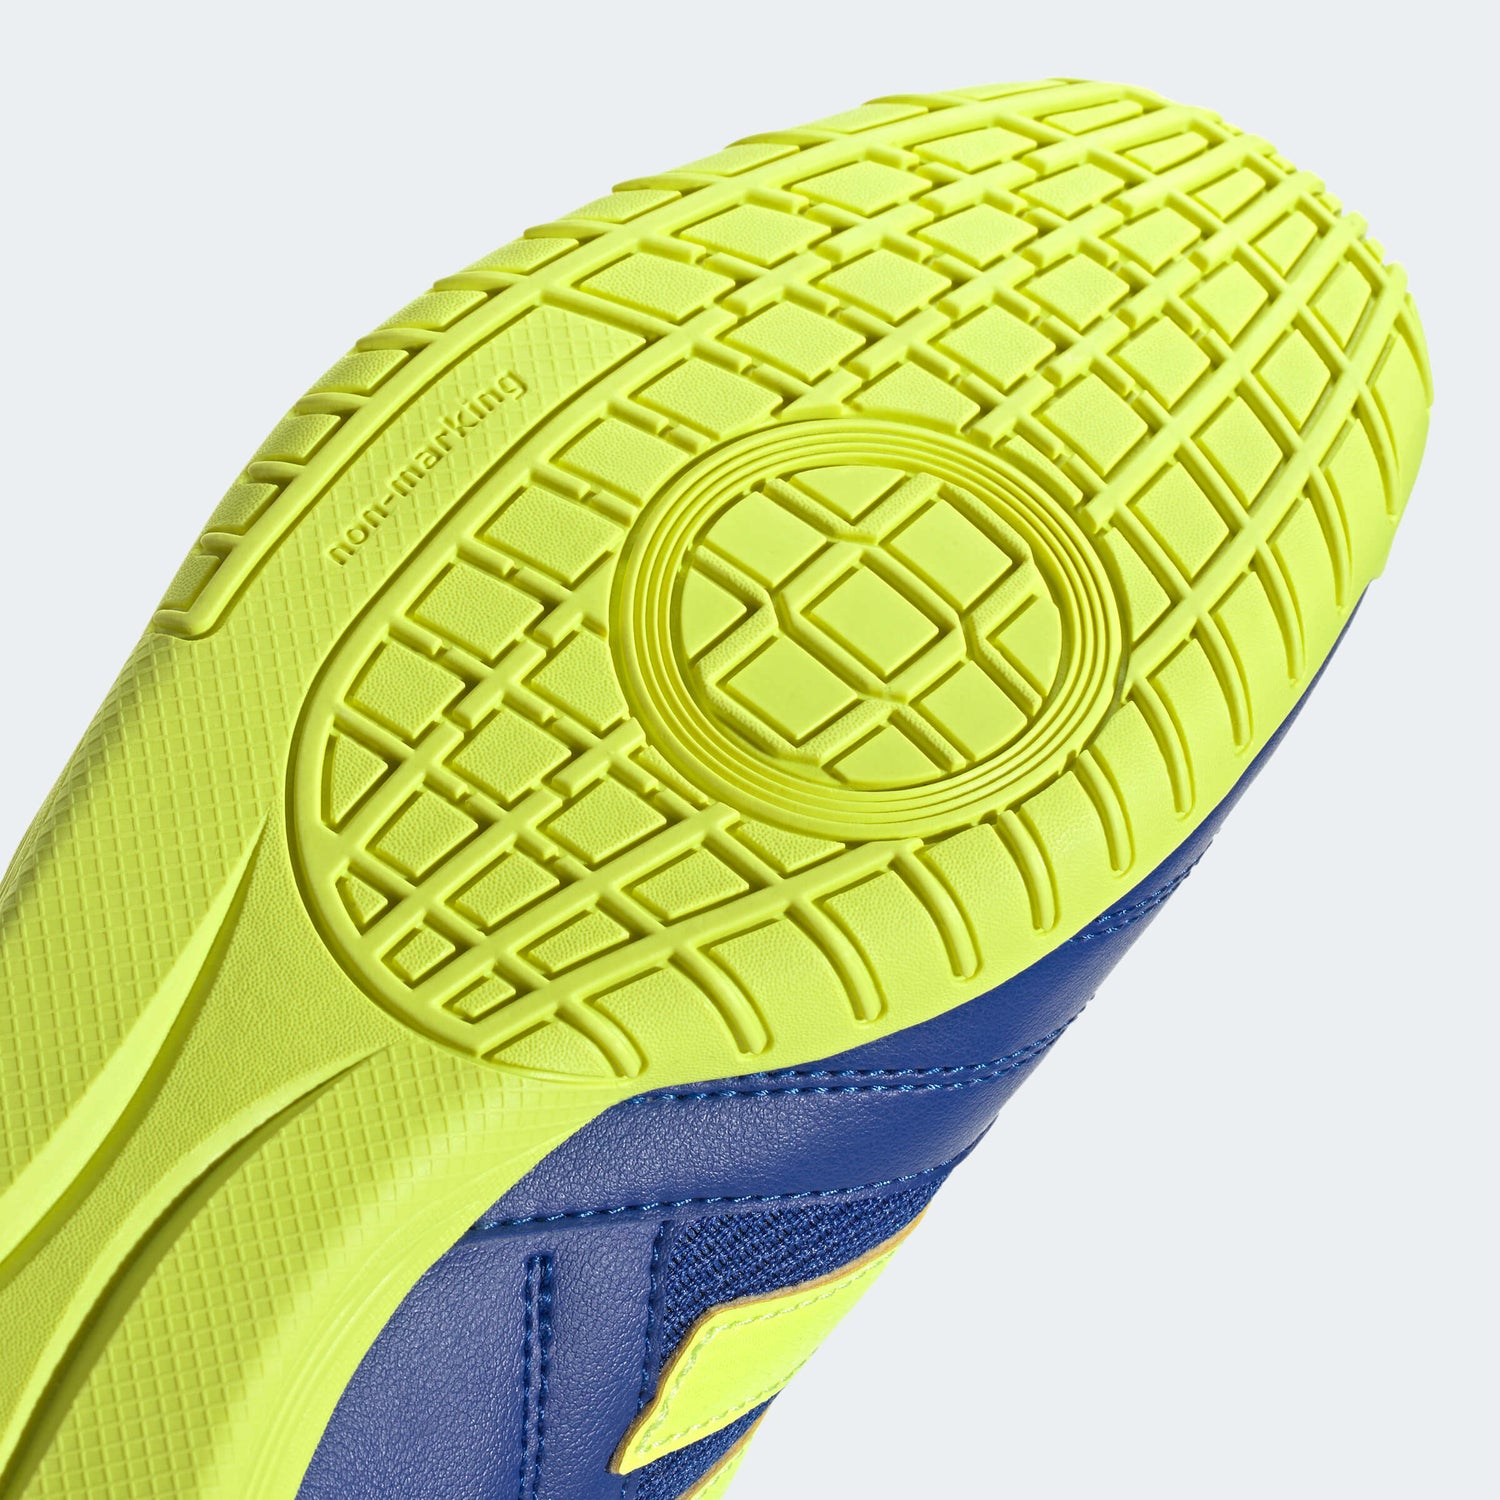 Adidas Super Sala 2 Indoor - Royal Blue - Solar Yellow (Detail 2)